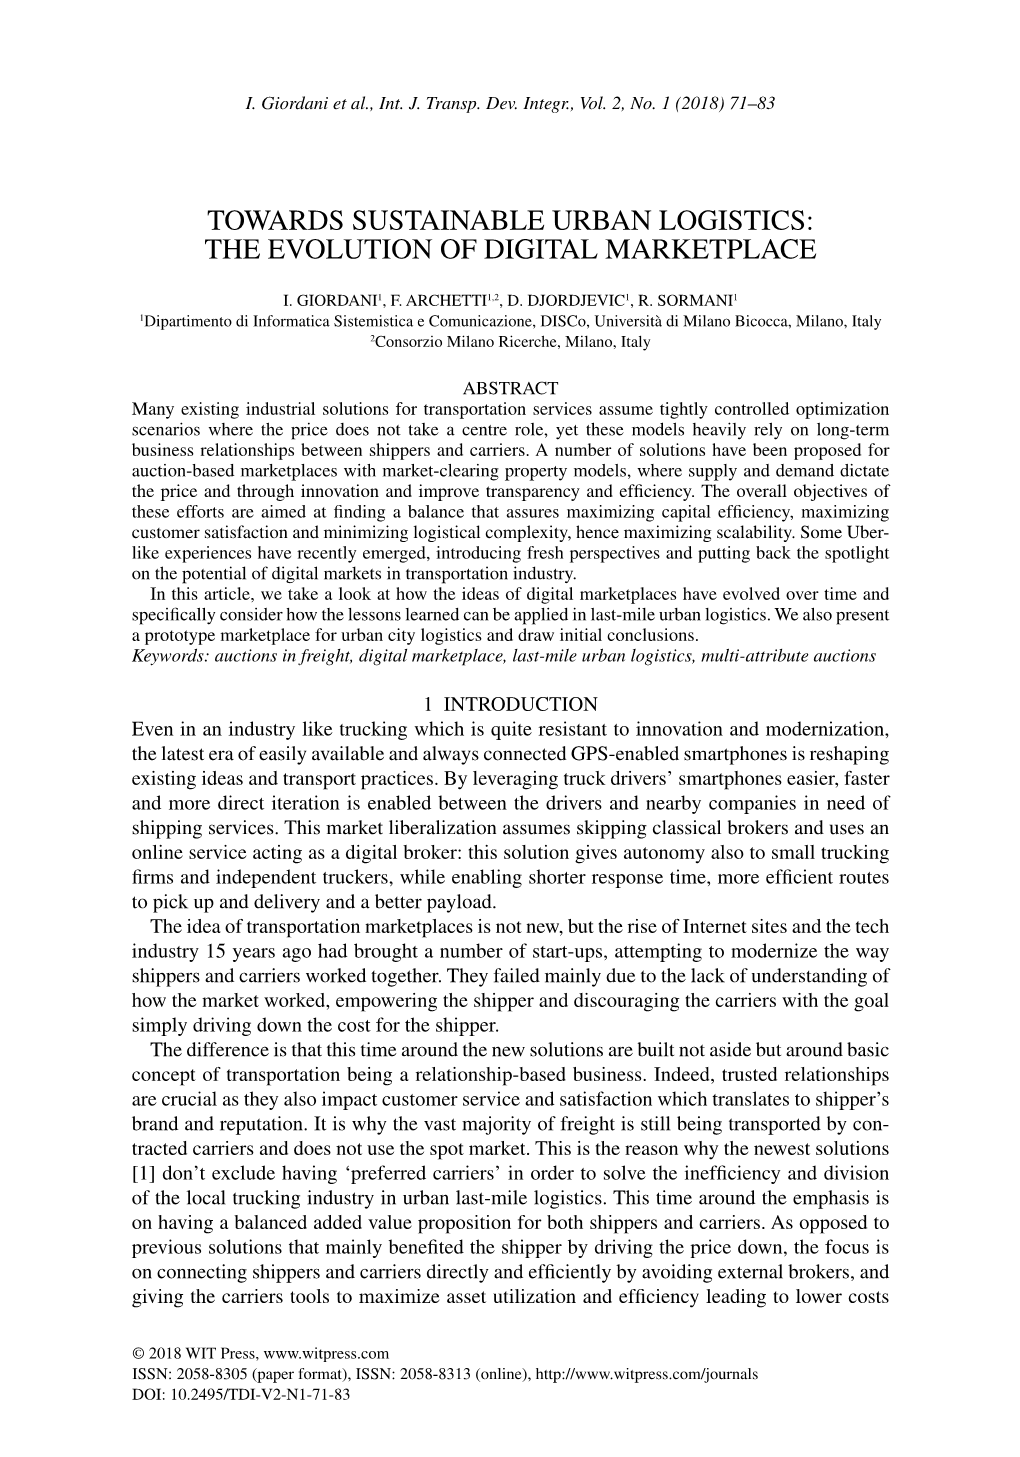 Towards Sustainable Urban Logistics: the Evolution of Digital Marketplace